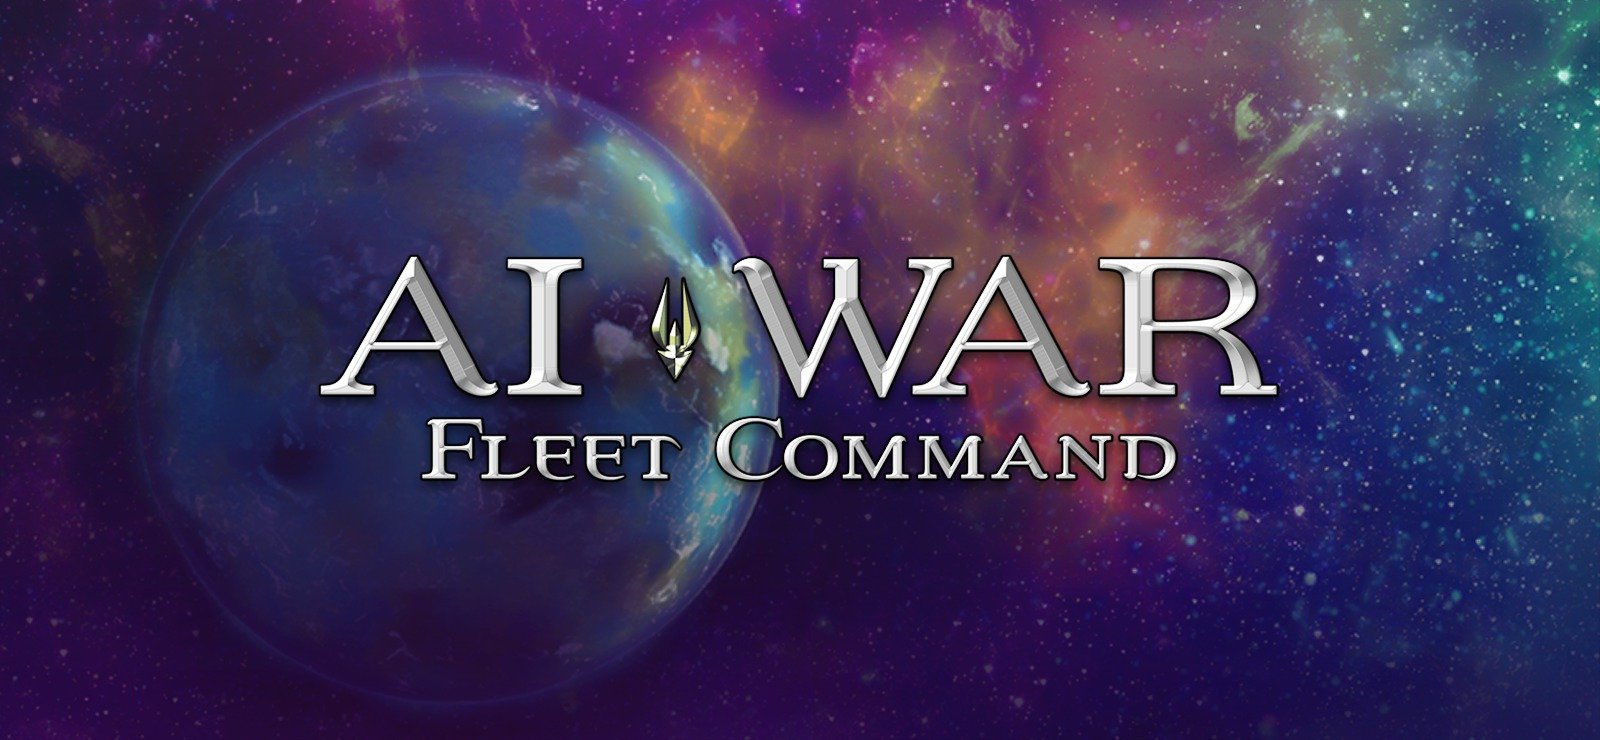 Space Wars Wiki